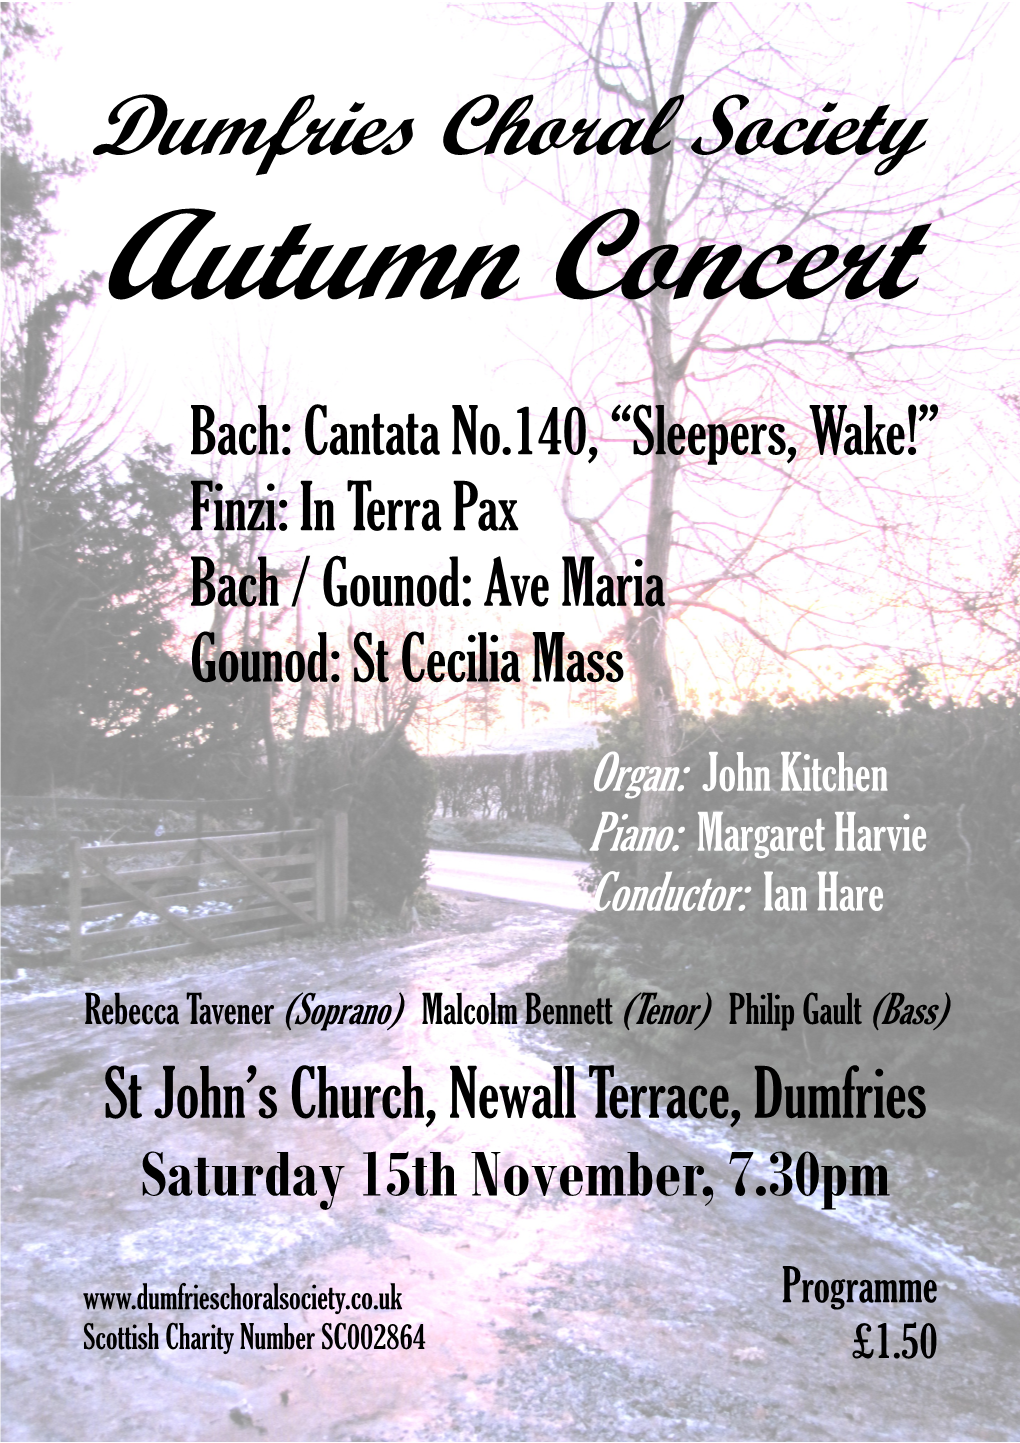 Autumn 2014 Concert Programme